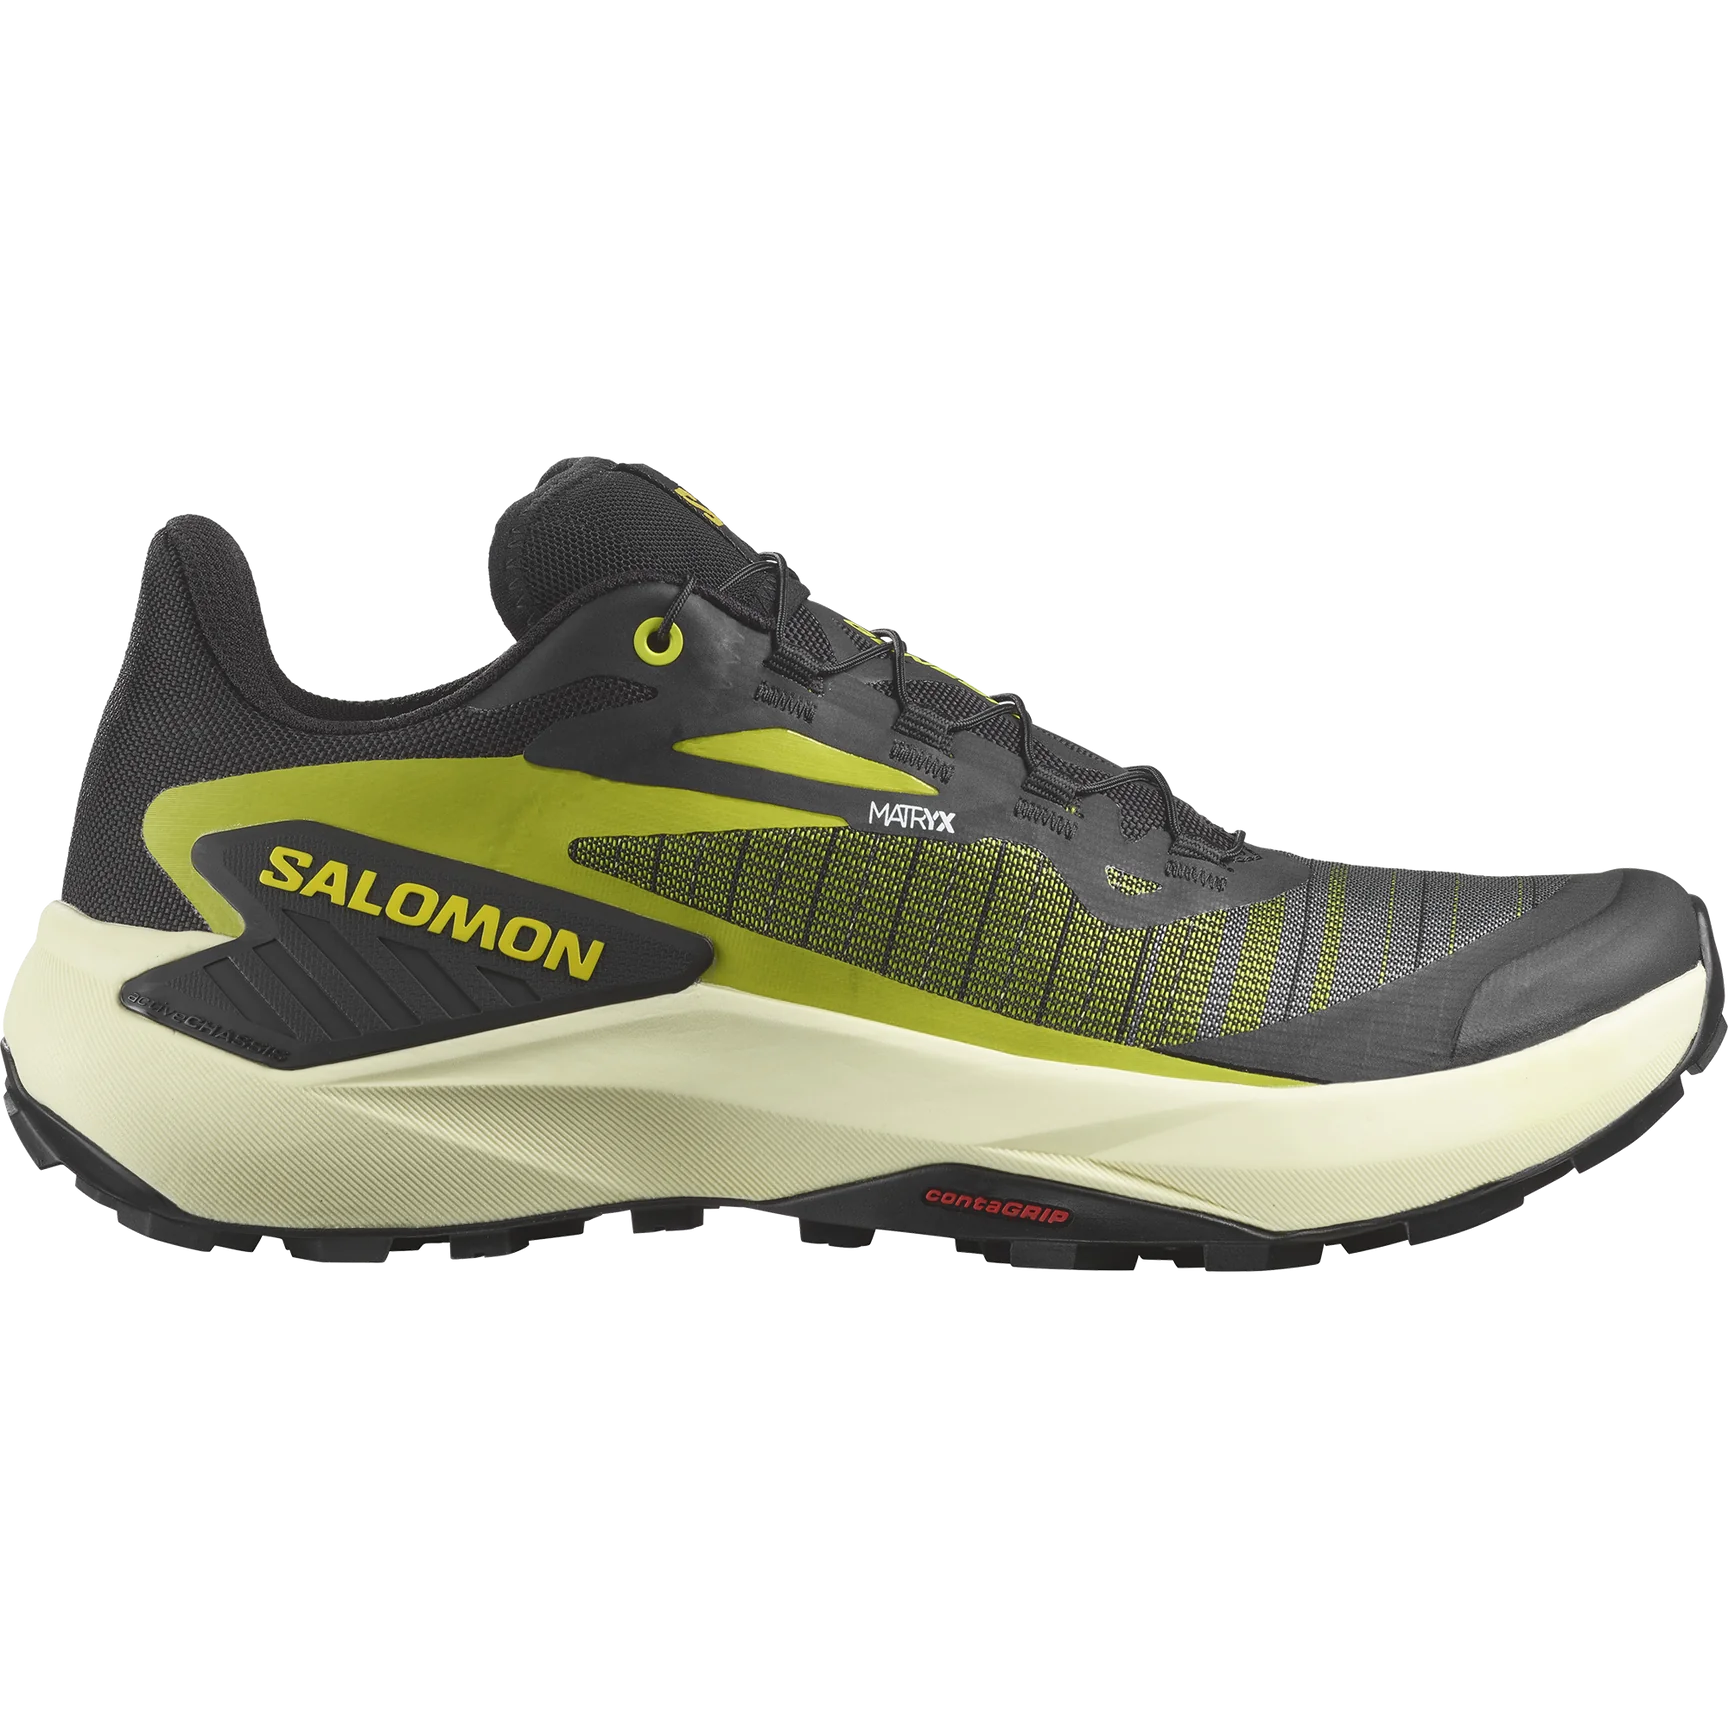 Salomon Genesis Shoe (Men's) - Black / Sulphur Spring / Transparent Yellow - Find Your Feet Australia Hobart Launceston Tasmania